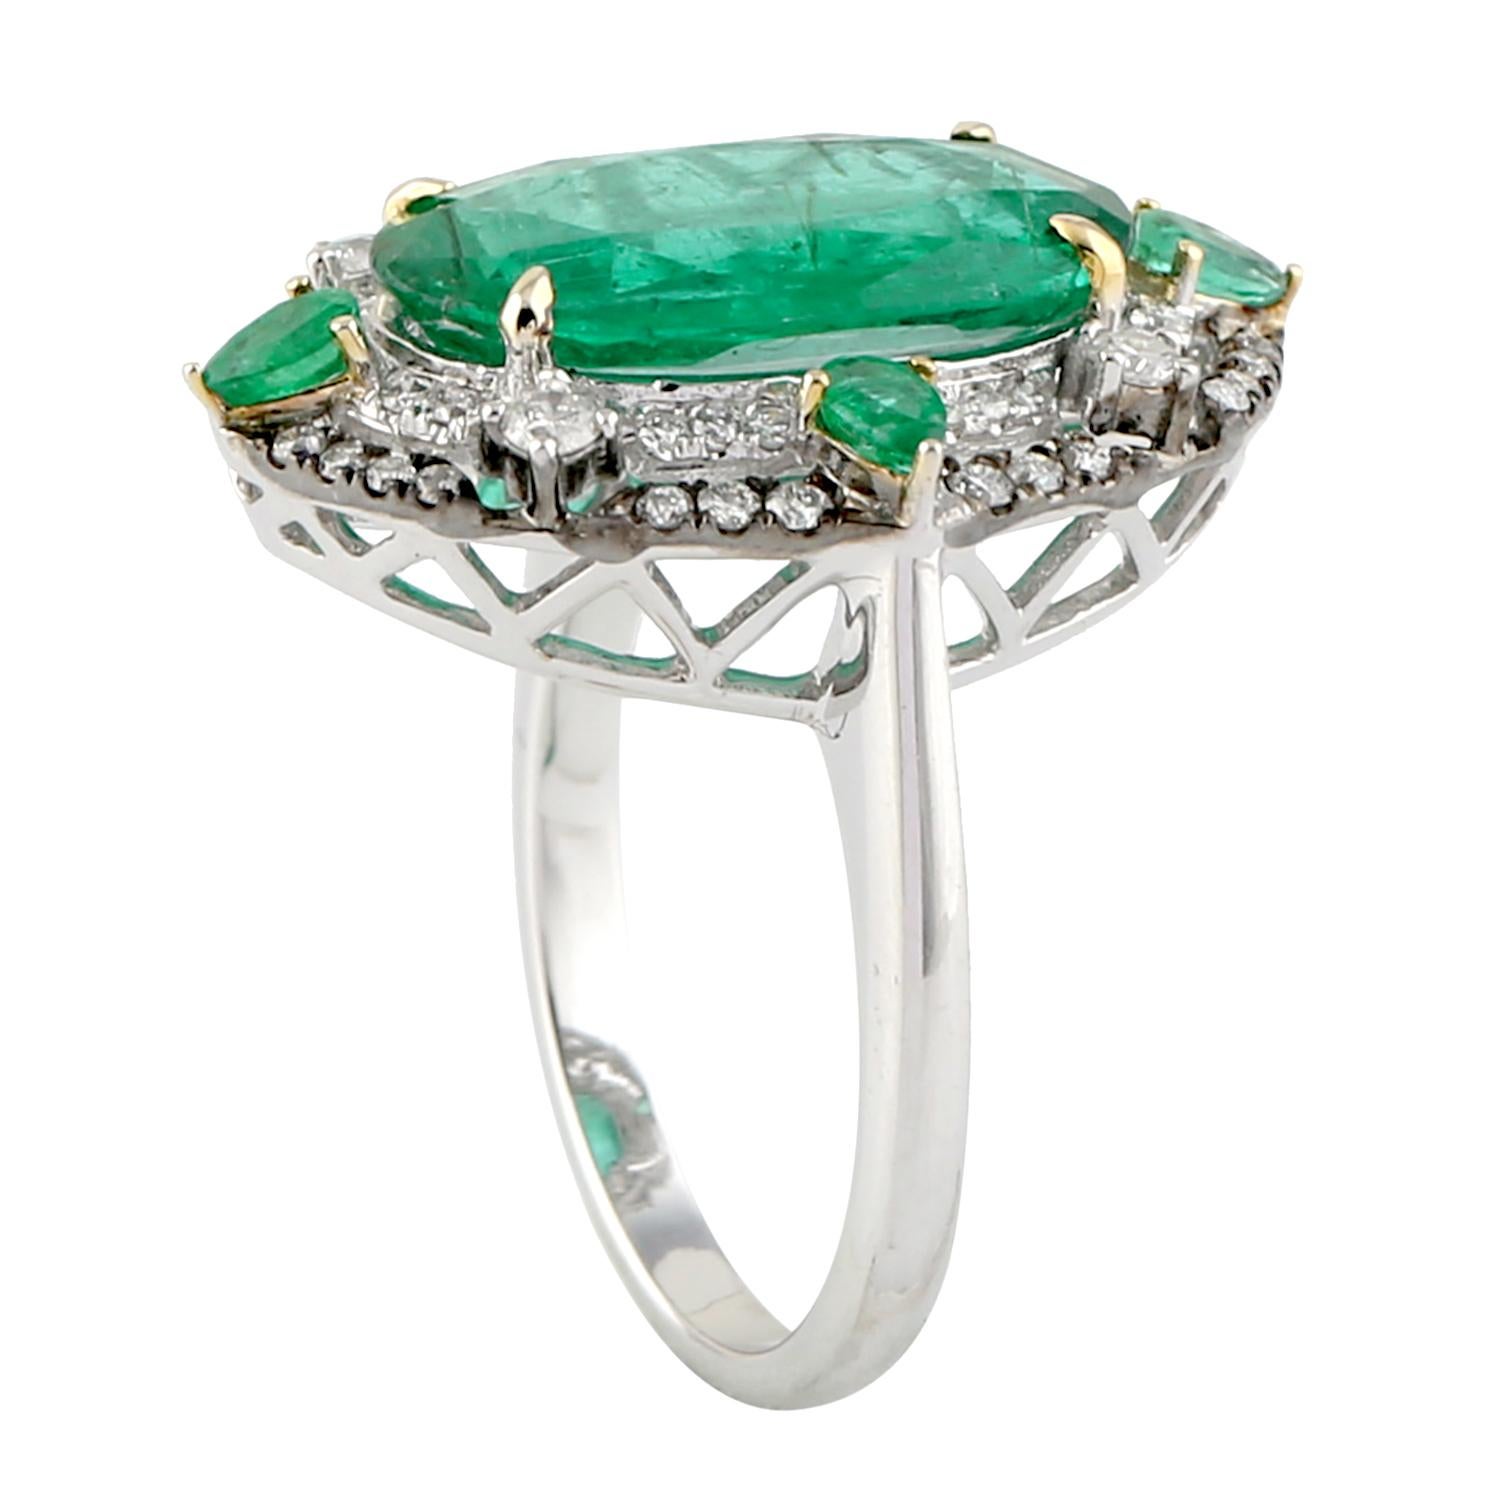 Brilliant Cut Cocktail Slice Emerald Ring with Diamonds Set in 18 Karat White Gold